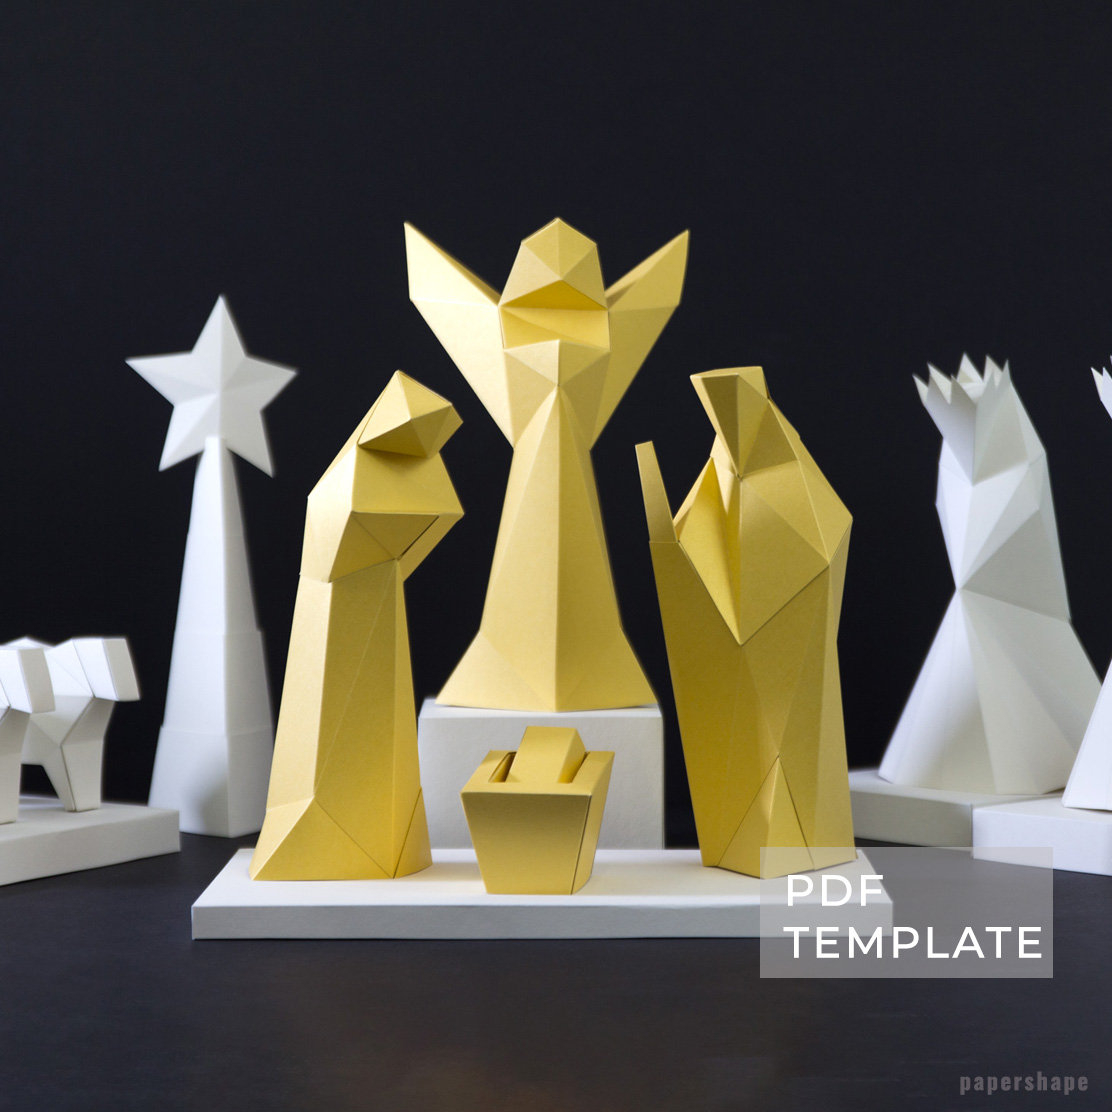 How To Make An Origami Nativity Scene Nativity Scene Nativity Set Nativity Advent Calendar Download Pdf Template Papercraft Christmas Diy Christmas Nativity Kit Papershape